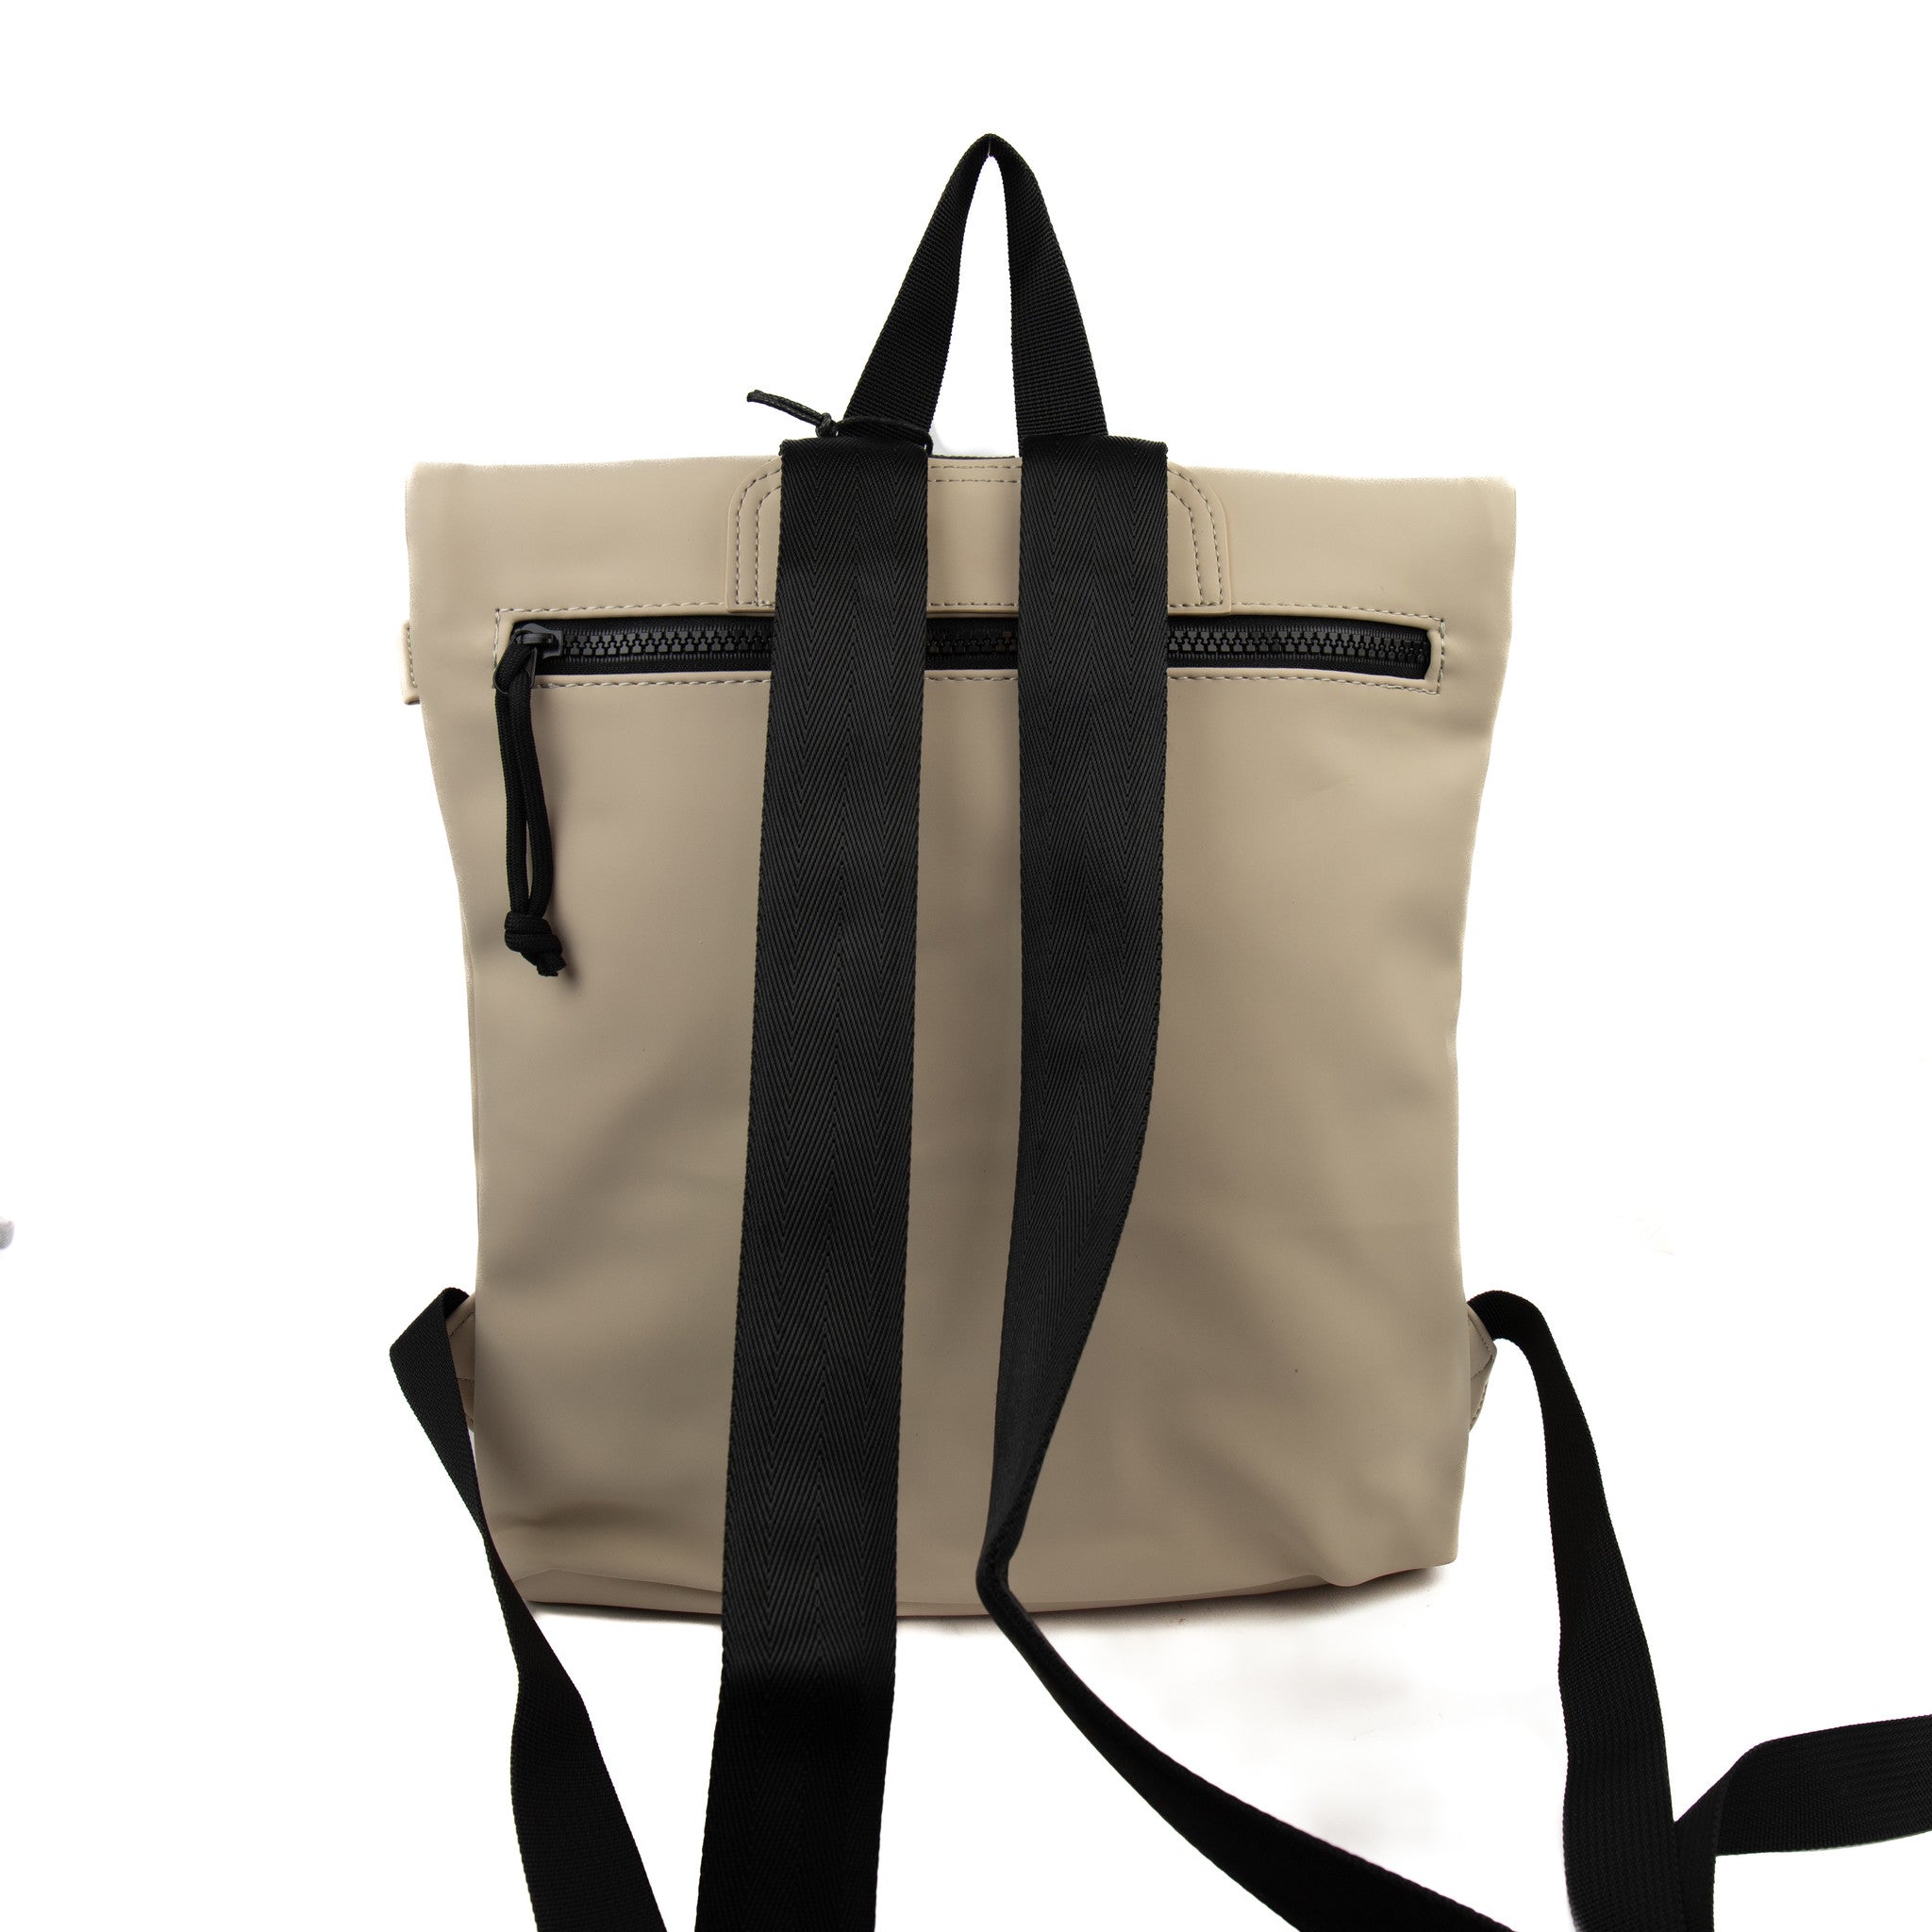 Waterproof backpack 'Mart' mini 9L bright beige